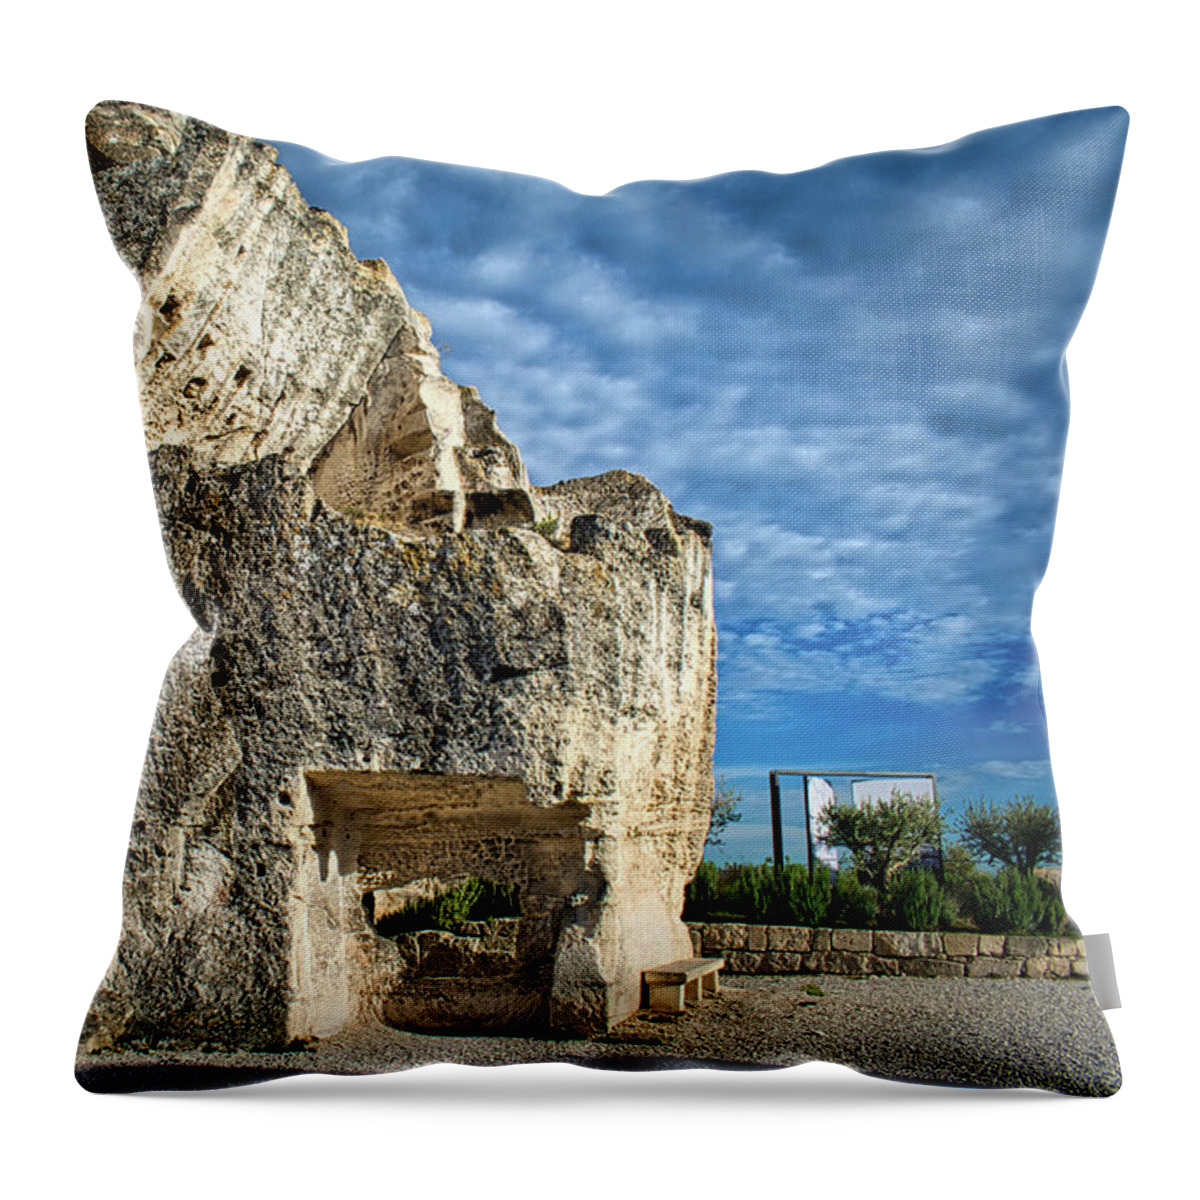 Rock Throw Pillow featuring the photograph Chateau des Baux by Portia Olaughlin